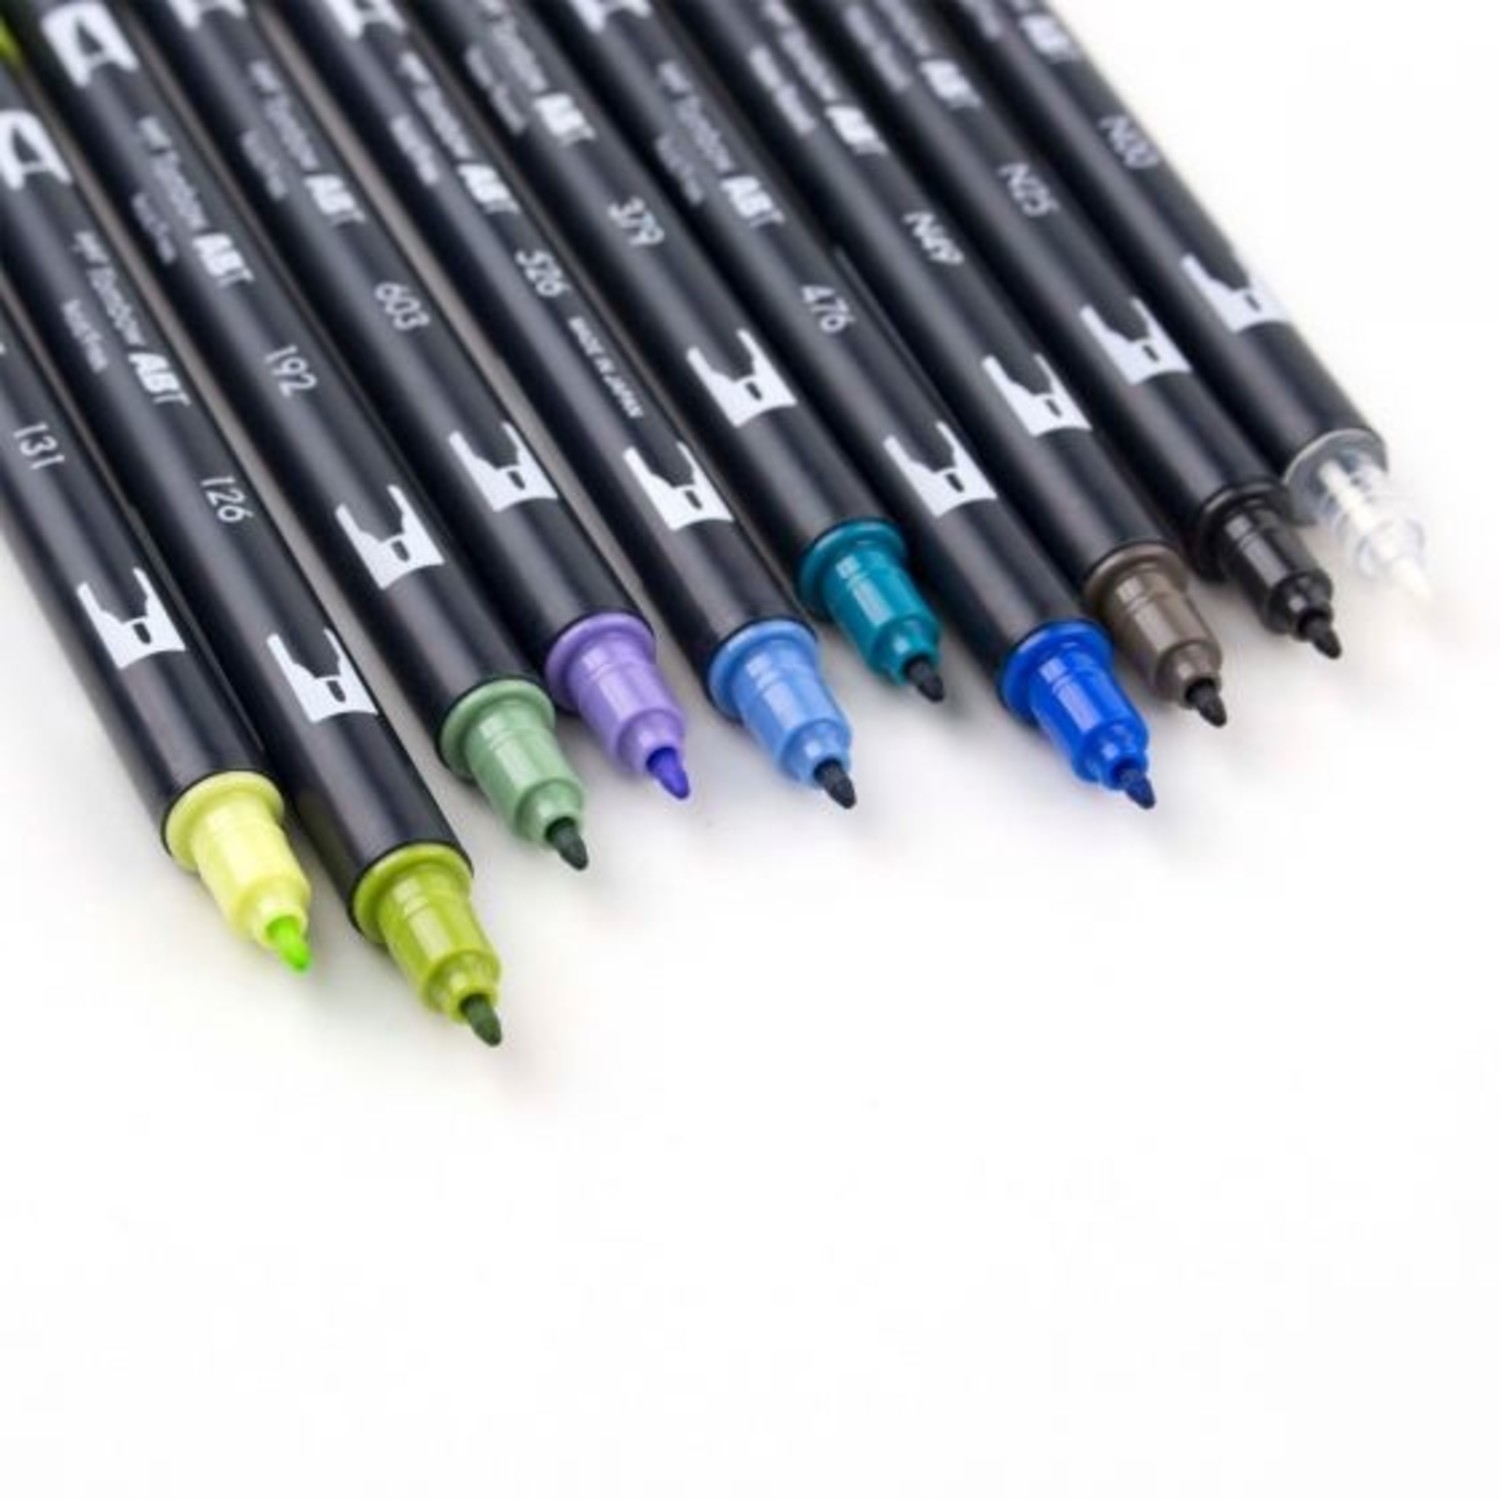 Tombow Dual Brush 10-Color Landscape Pen Set - Wonder Fair Home Shopping  Network